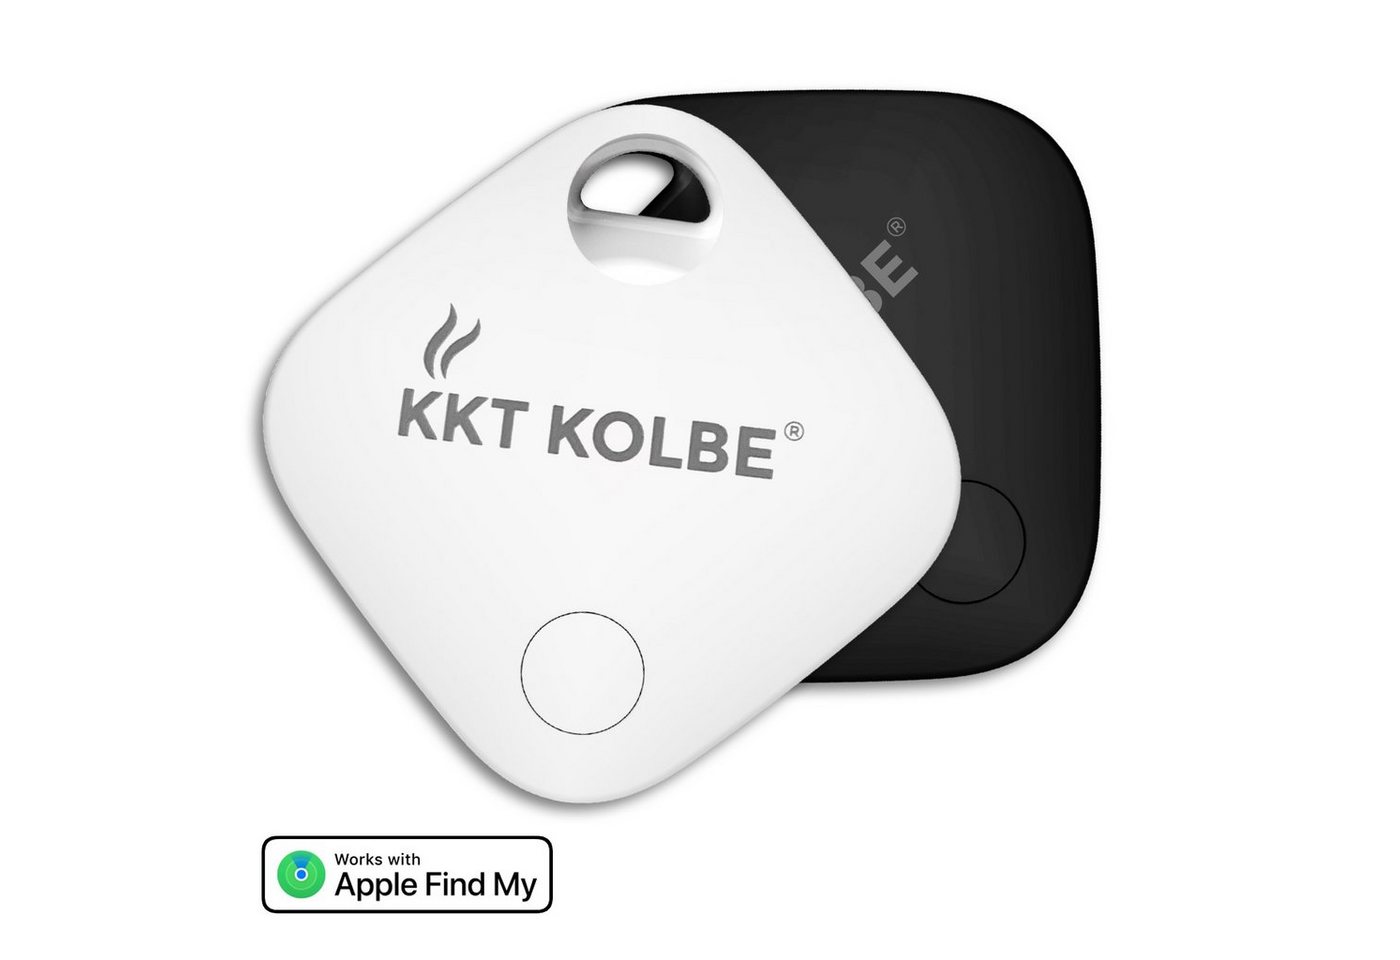 KKT KOLBE K-TAG Navigationsgerät (Schlüsselfinder, AirTag, Tracker, Apple Find My, iOS Smart App) von KKT KOLBE